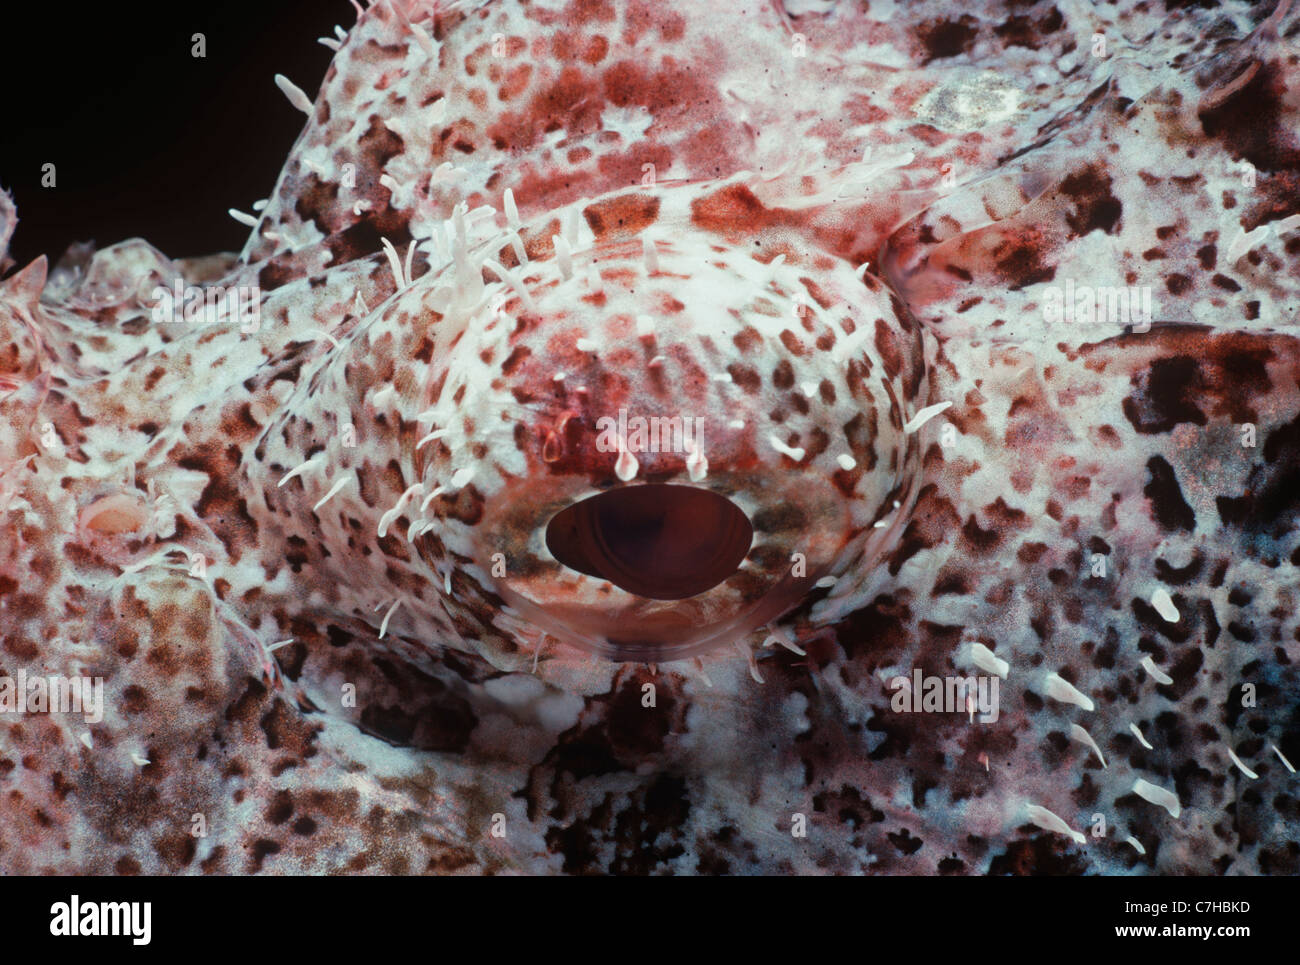 Eye of a poisonous Tassled Scorpionfish (Scorpaneopsis oxcephalus). Egypt - Red Sea Stock Photo